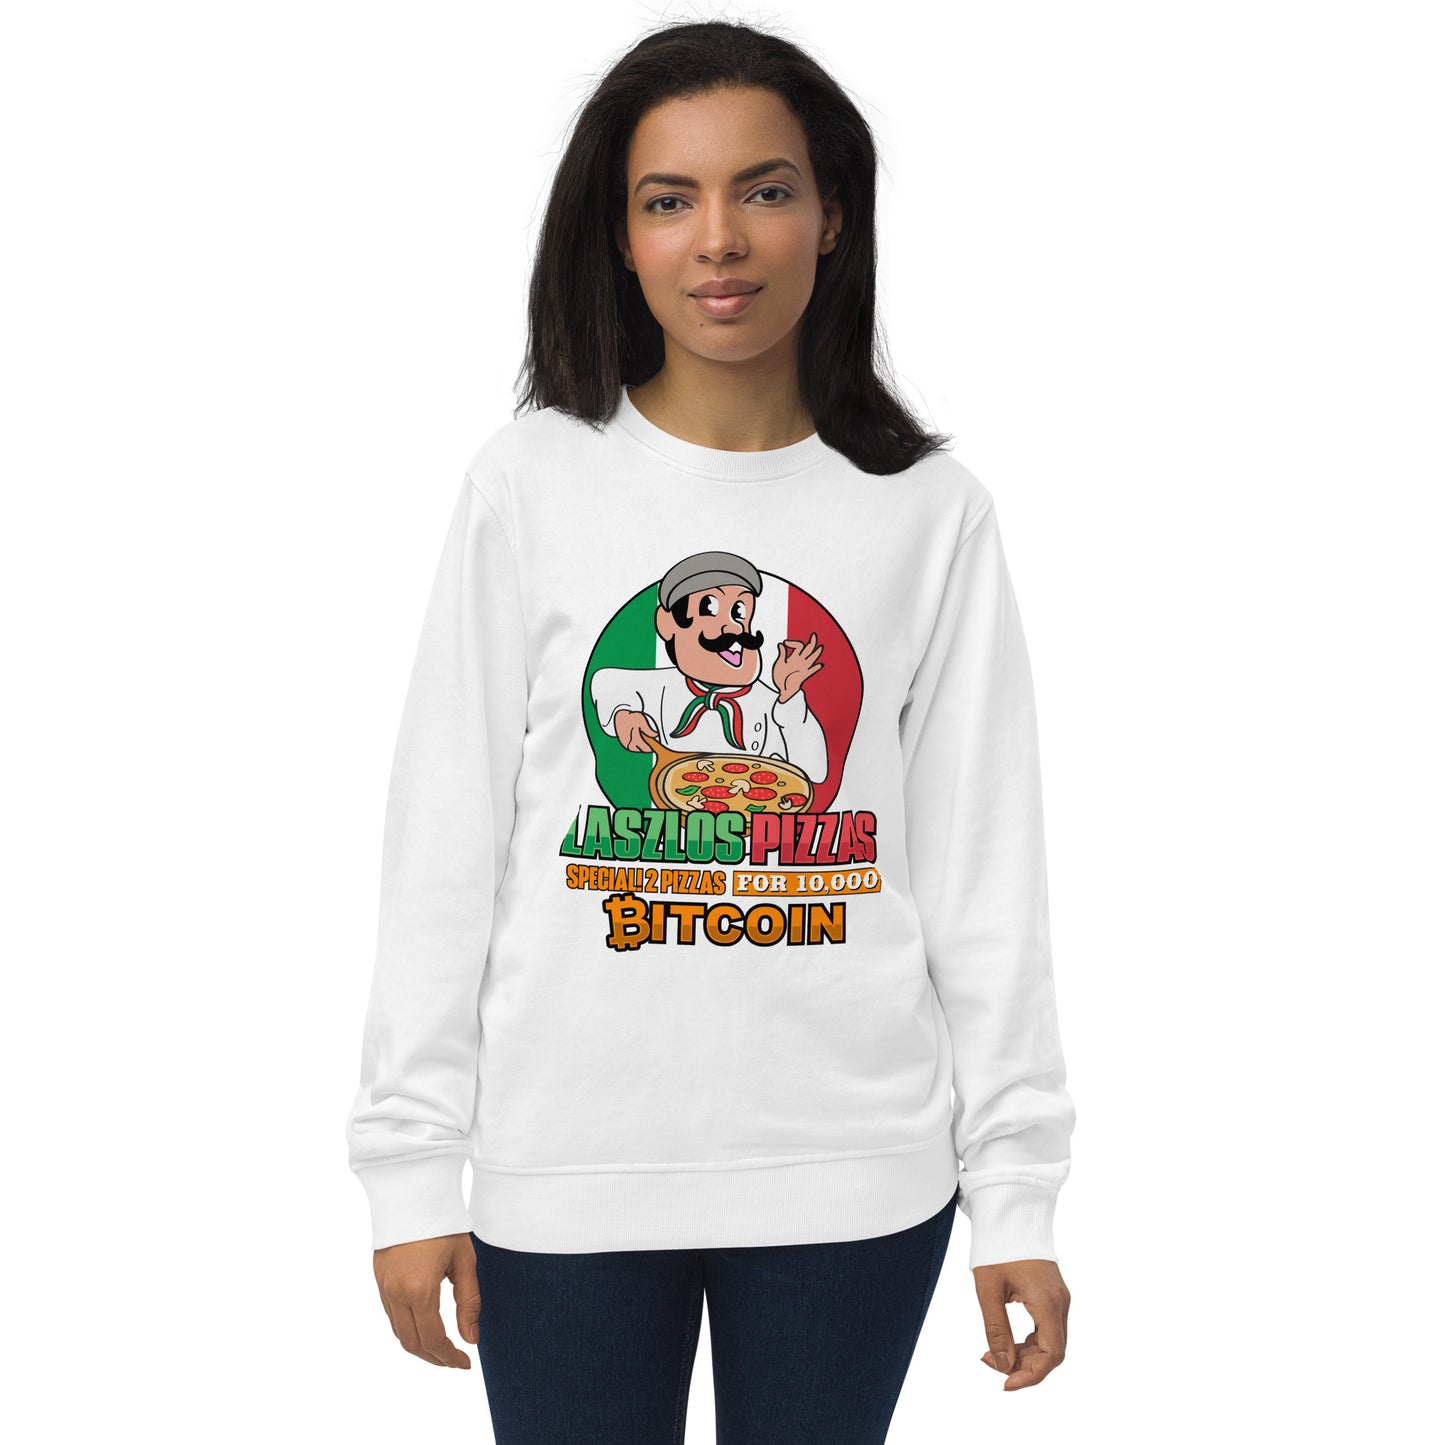 Bitcoin Pizza Day organic sweatshirt